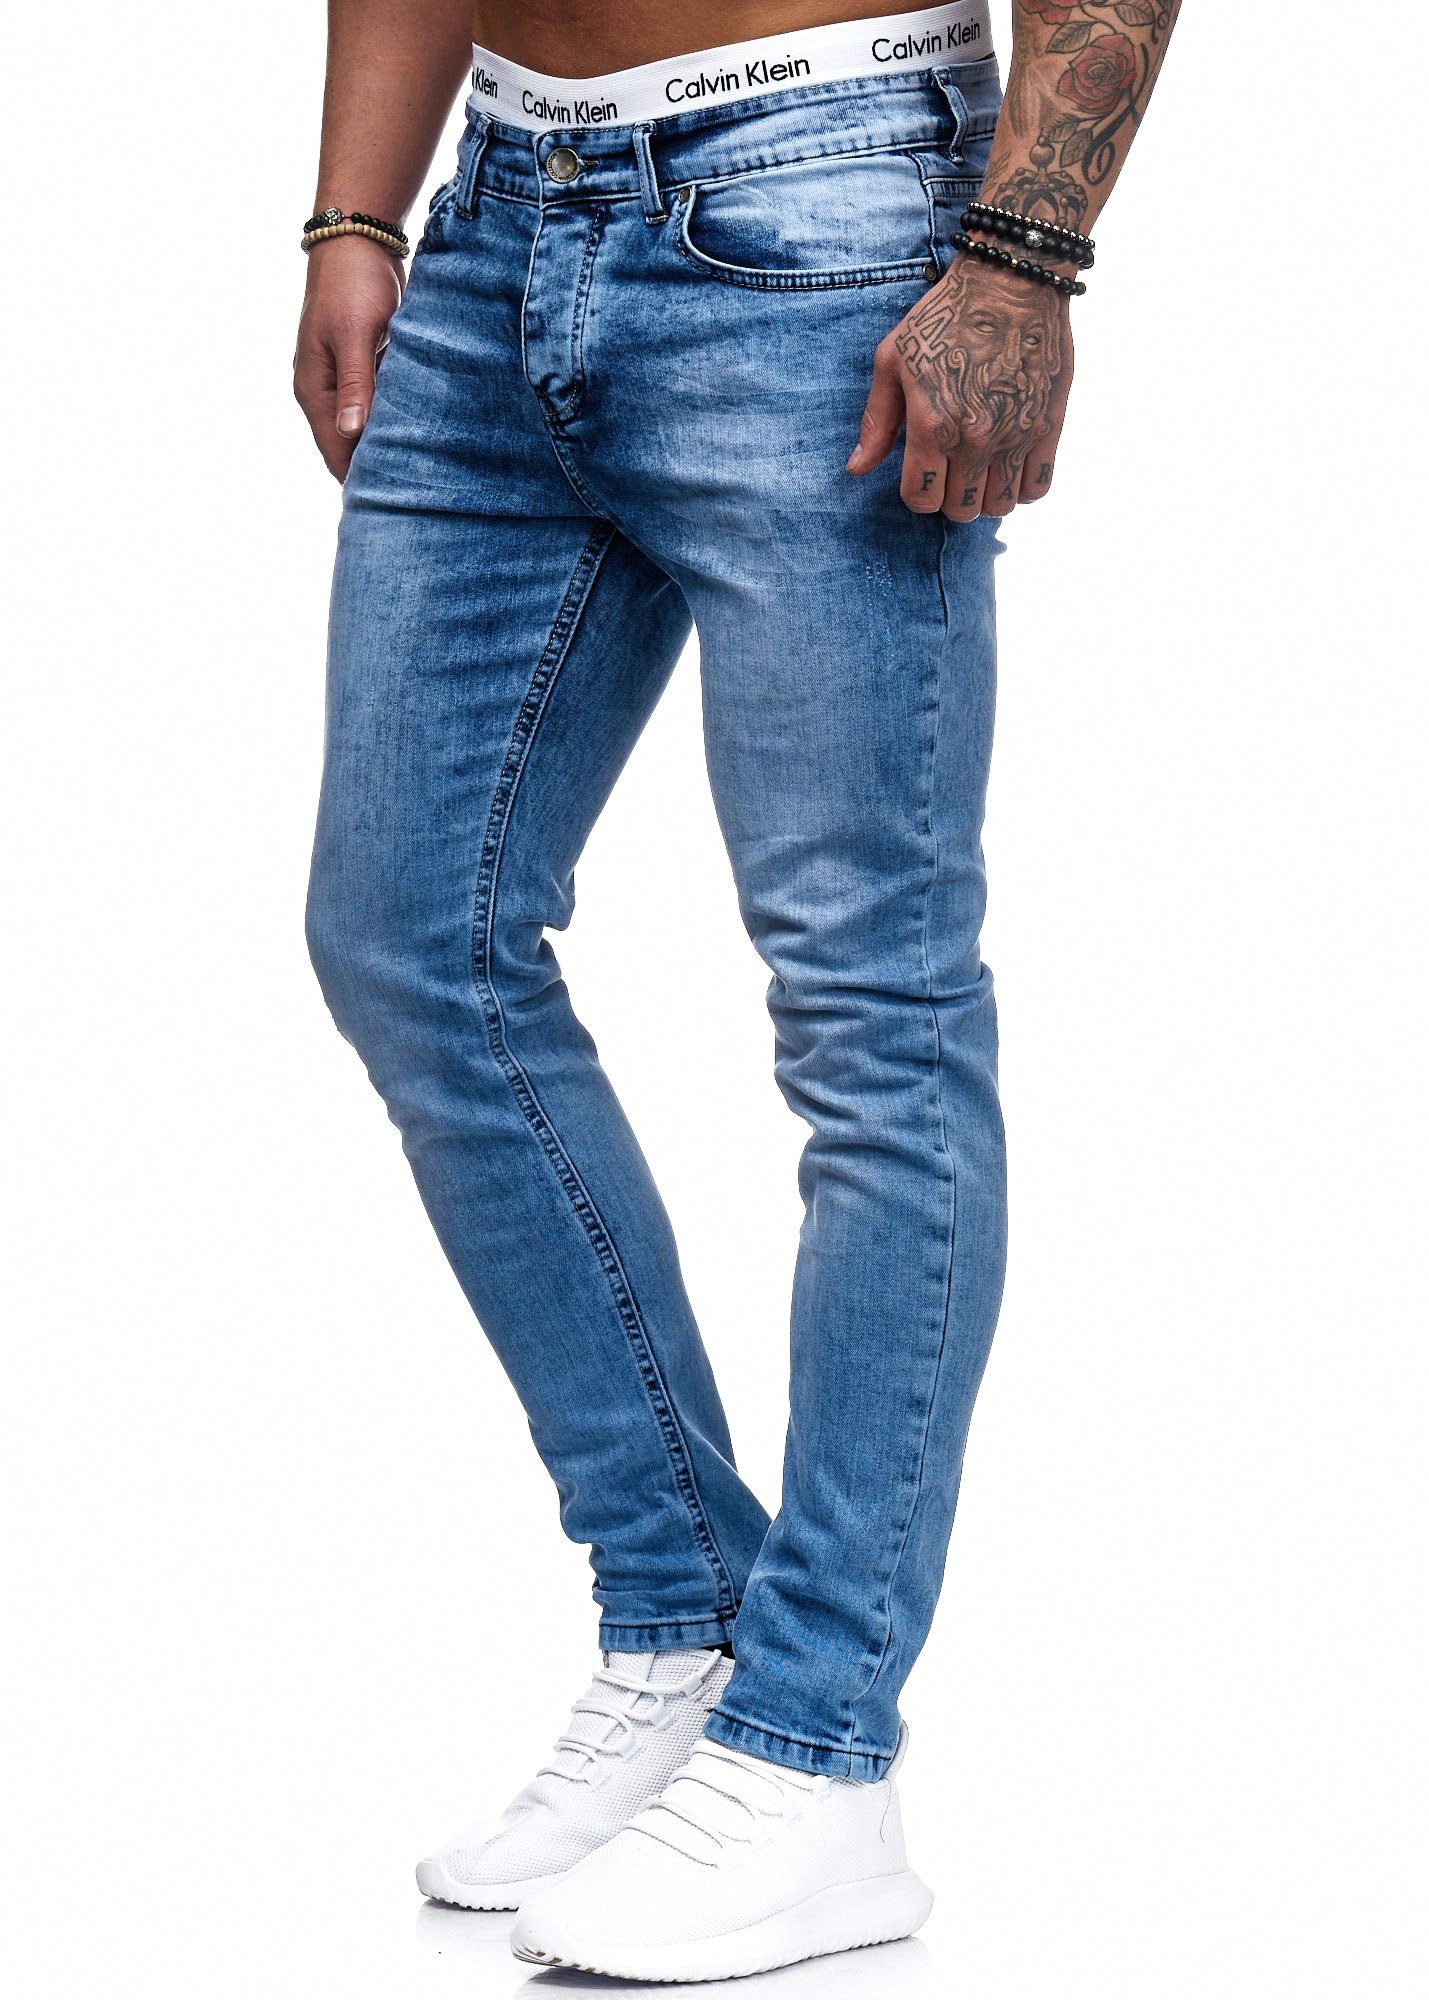 Chino Hose Slim Herren Code47 Fit Jeanshose Slim-fit-Jeans Hellblau 5080 Basic Stretch Jeans Designer